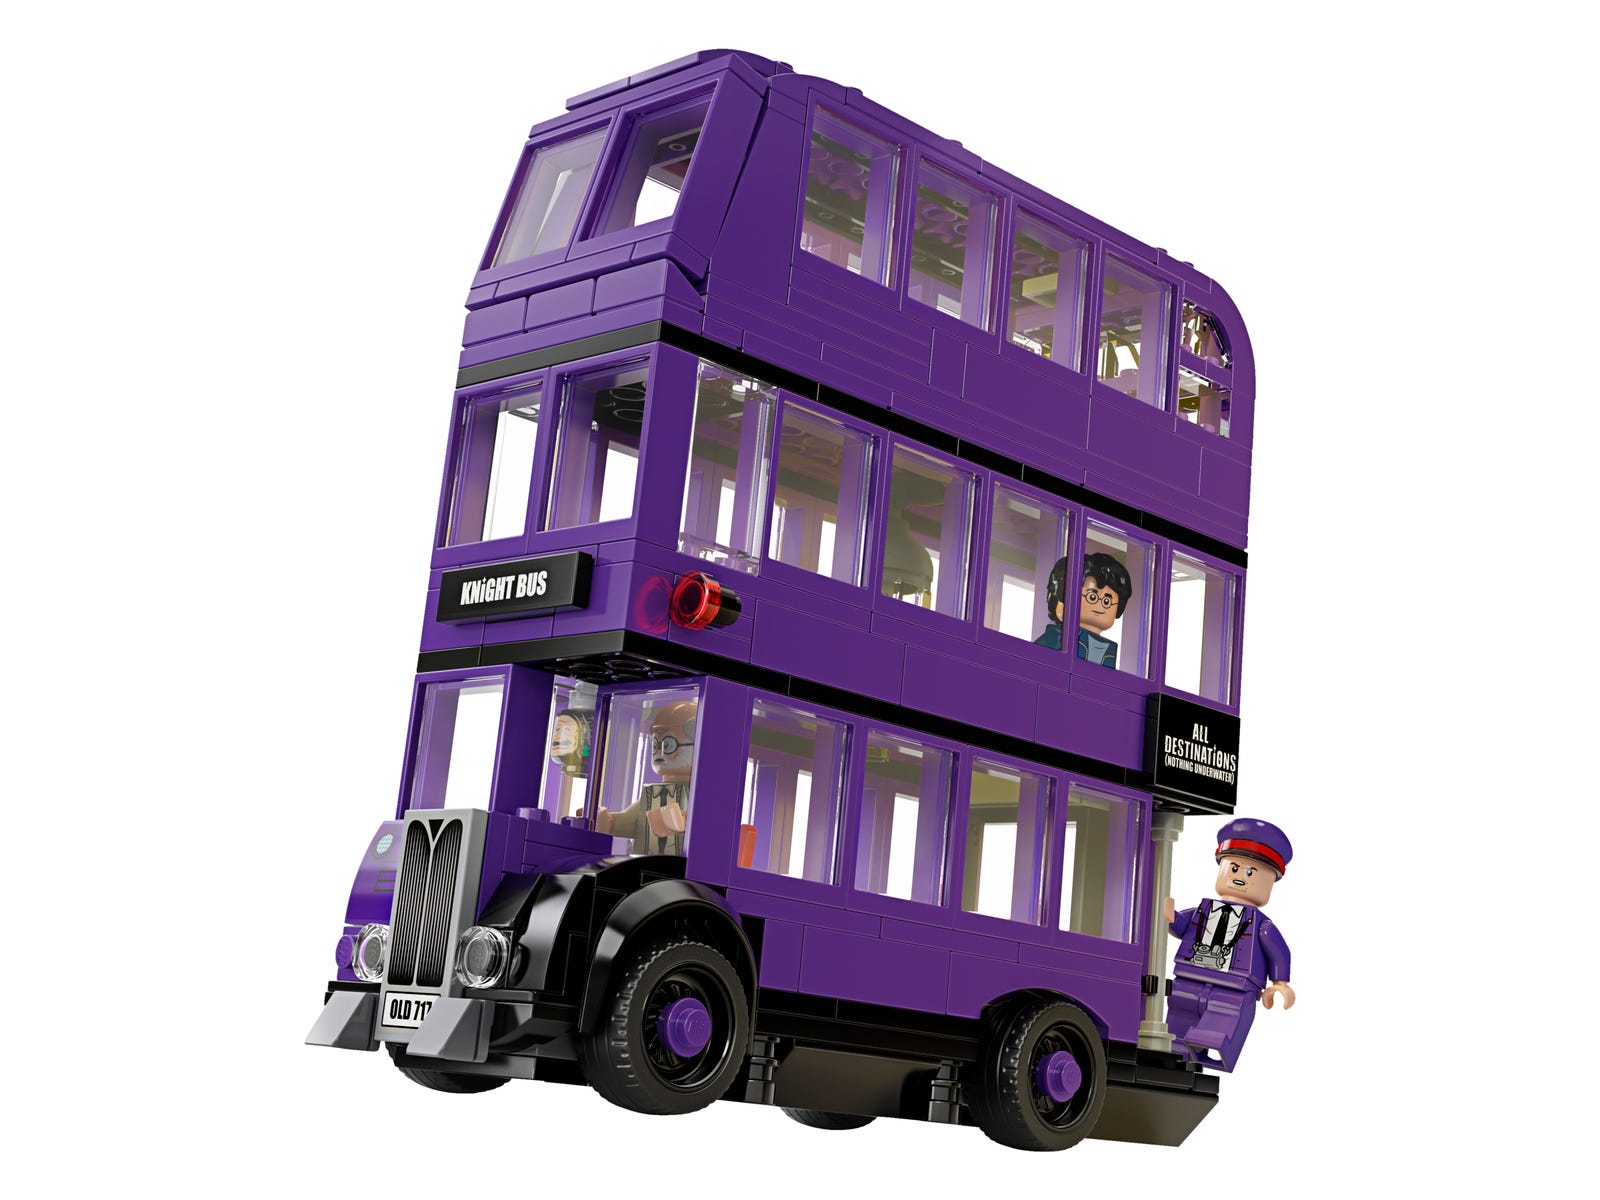 LEGO Harry Potter The Knight Bus 75957